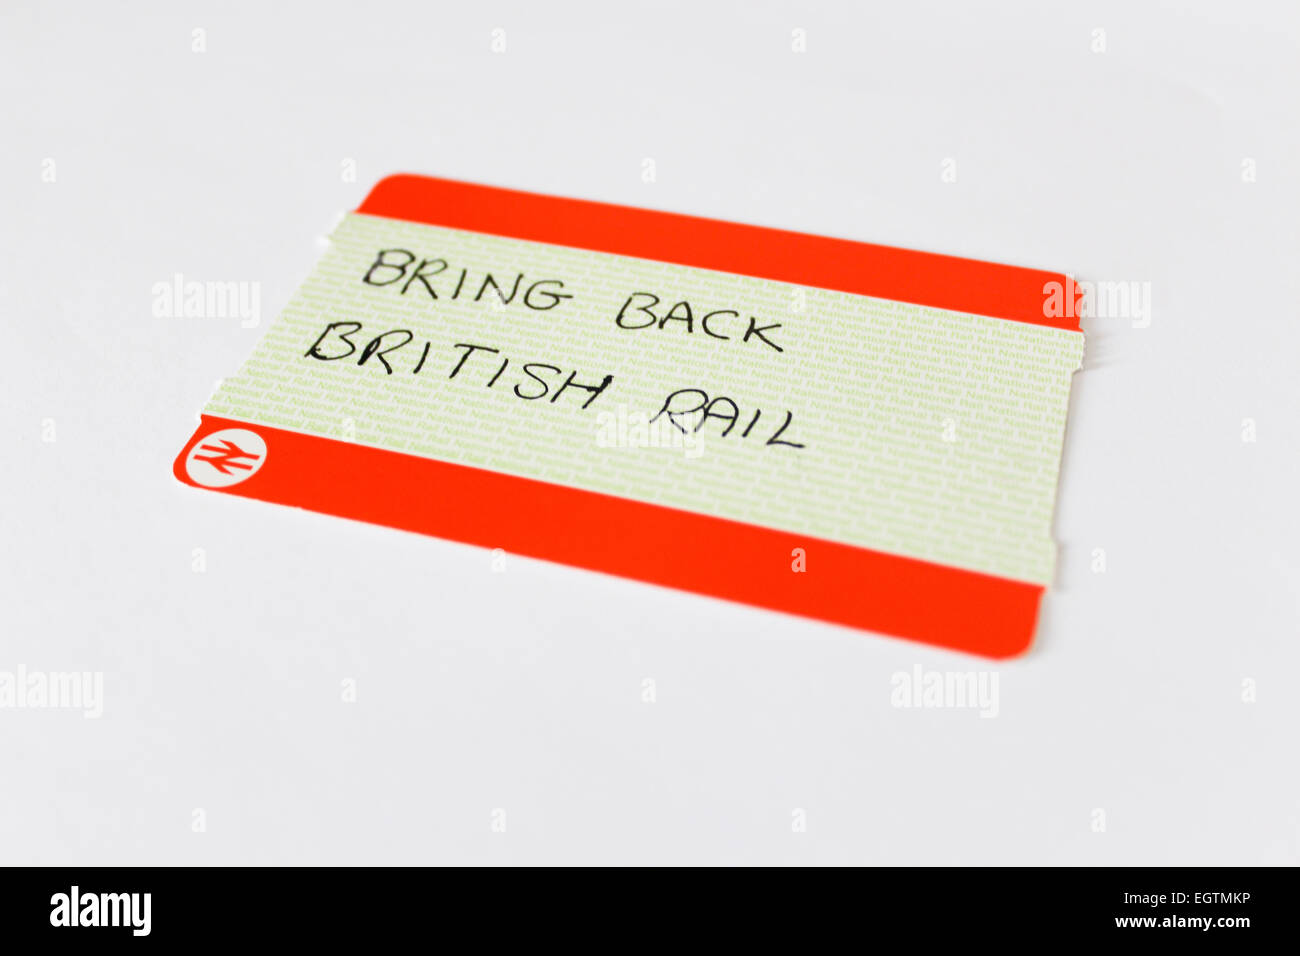 Bring Back British Rail Stock Photo